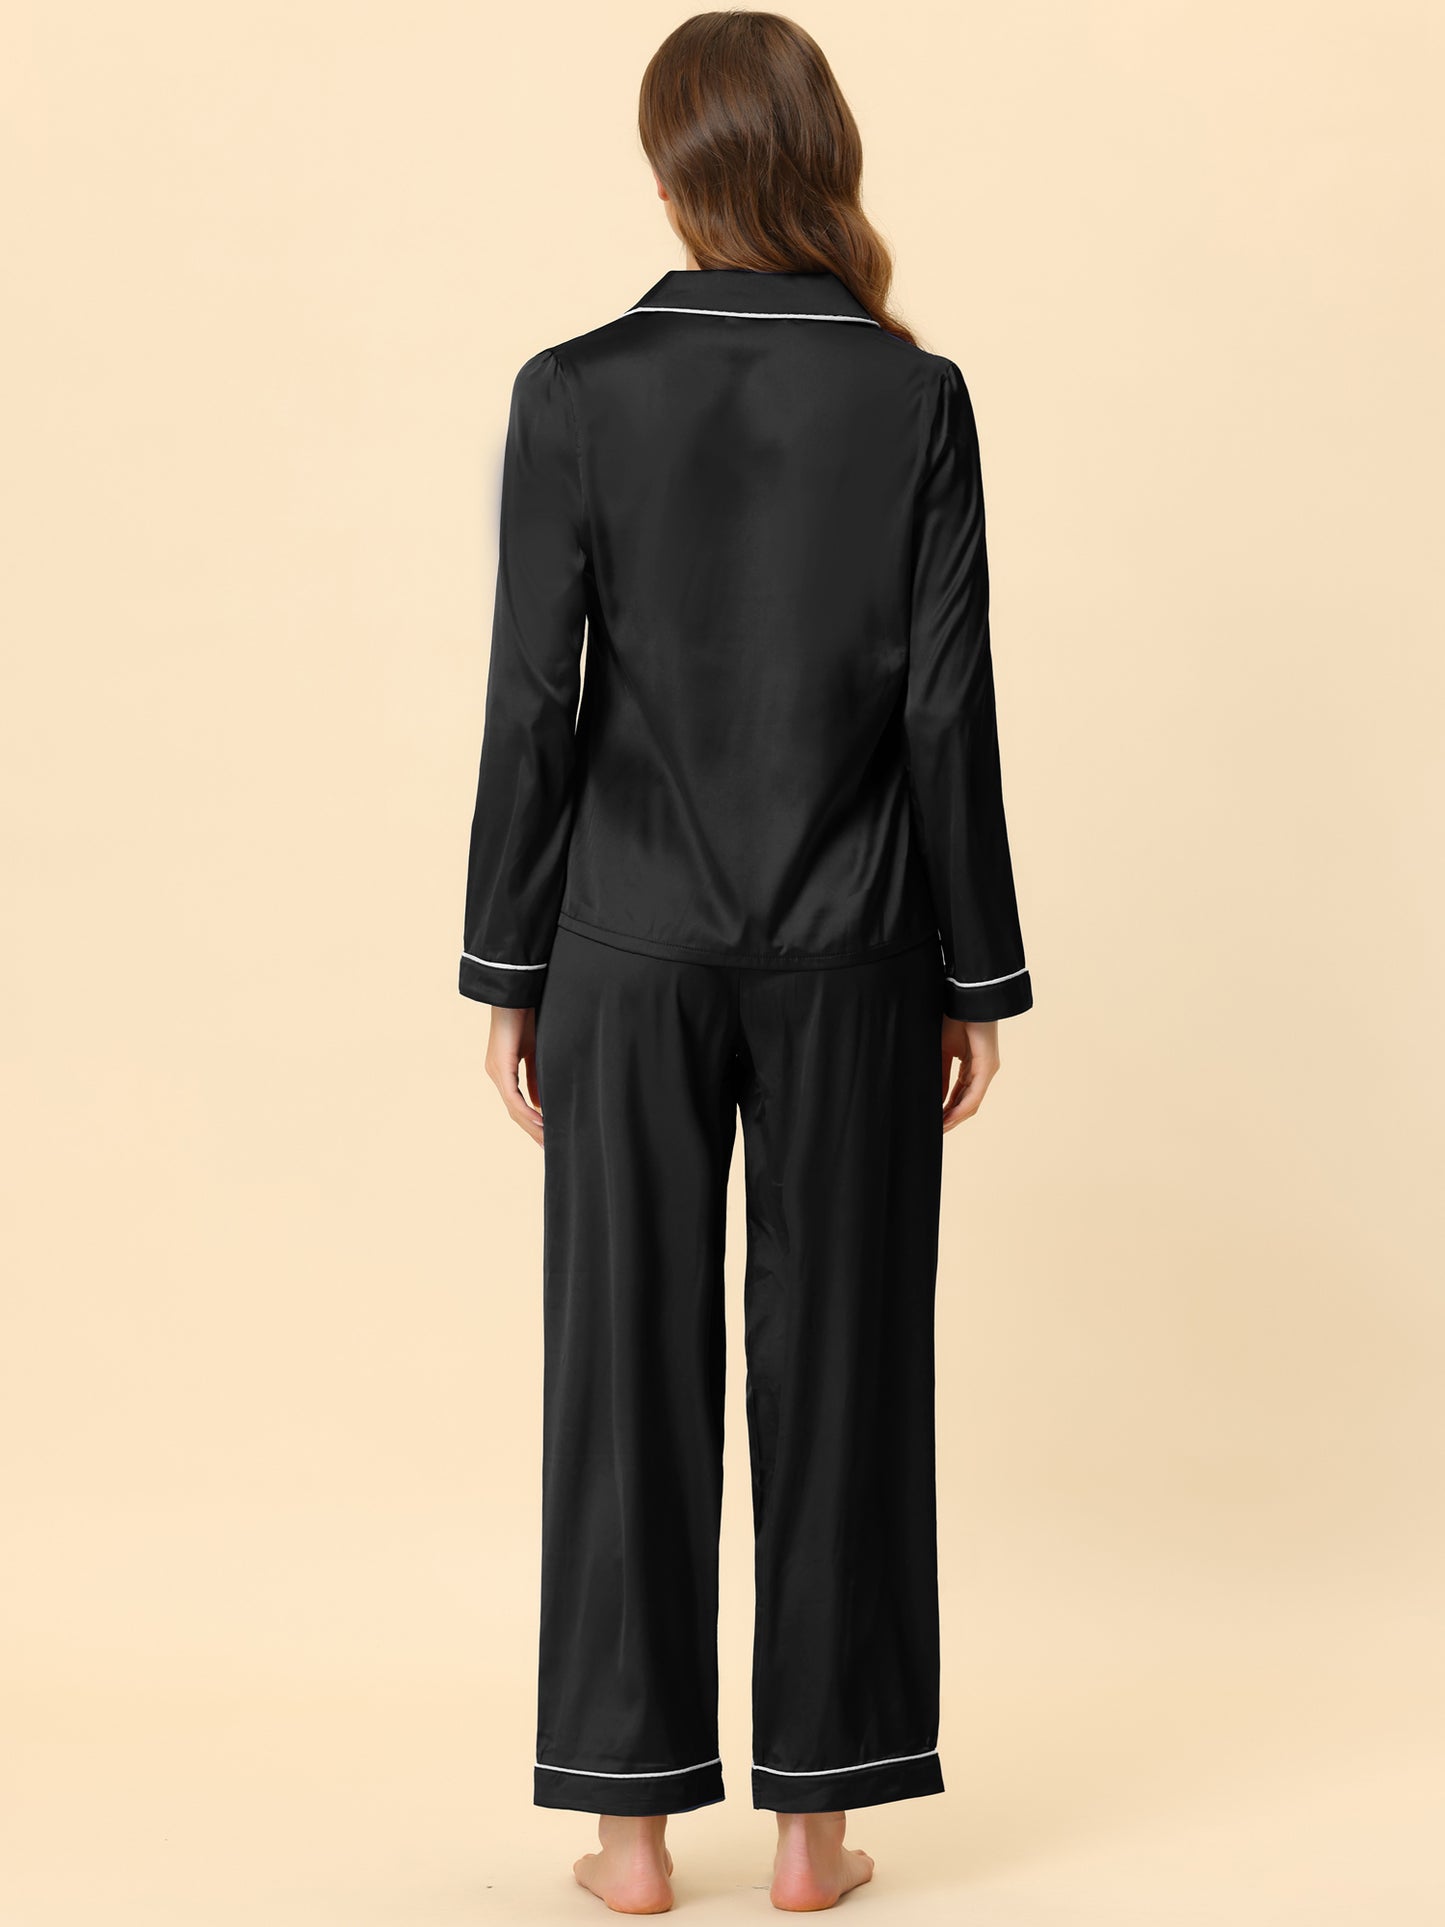 cheibear Pajama Loungewear Long Sleeves Tops and Pants Satin Sets Black